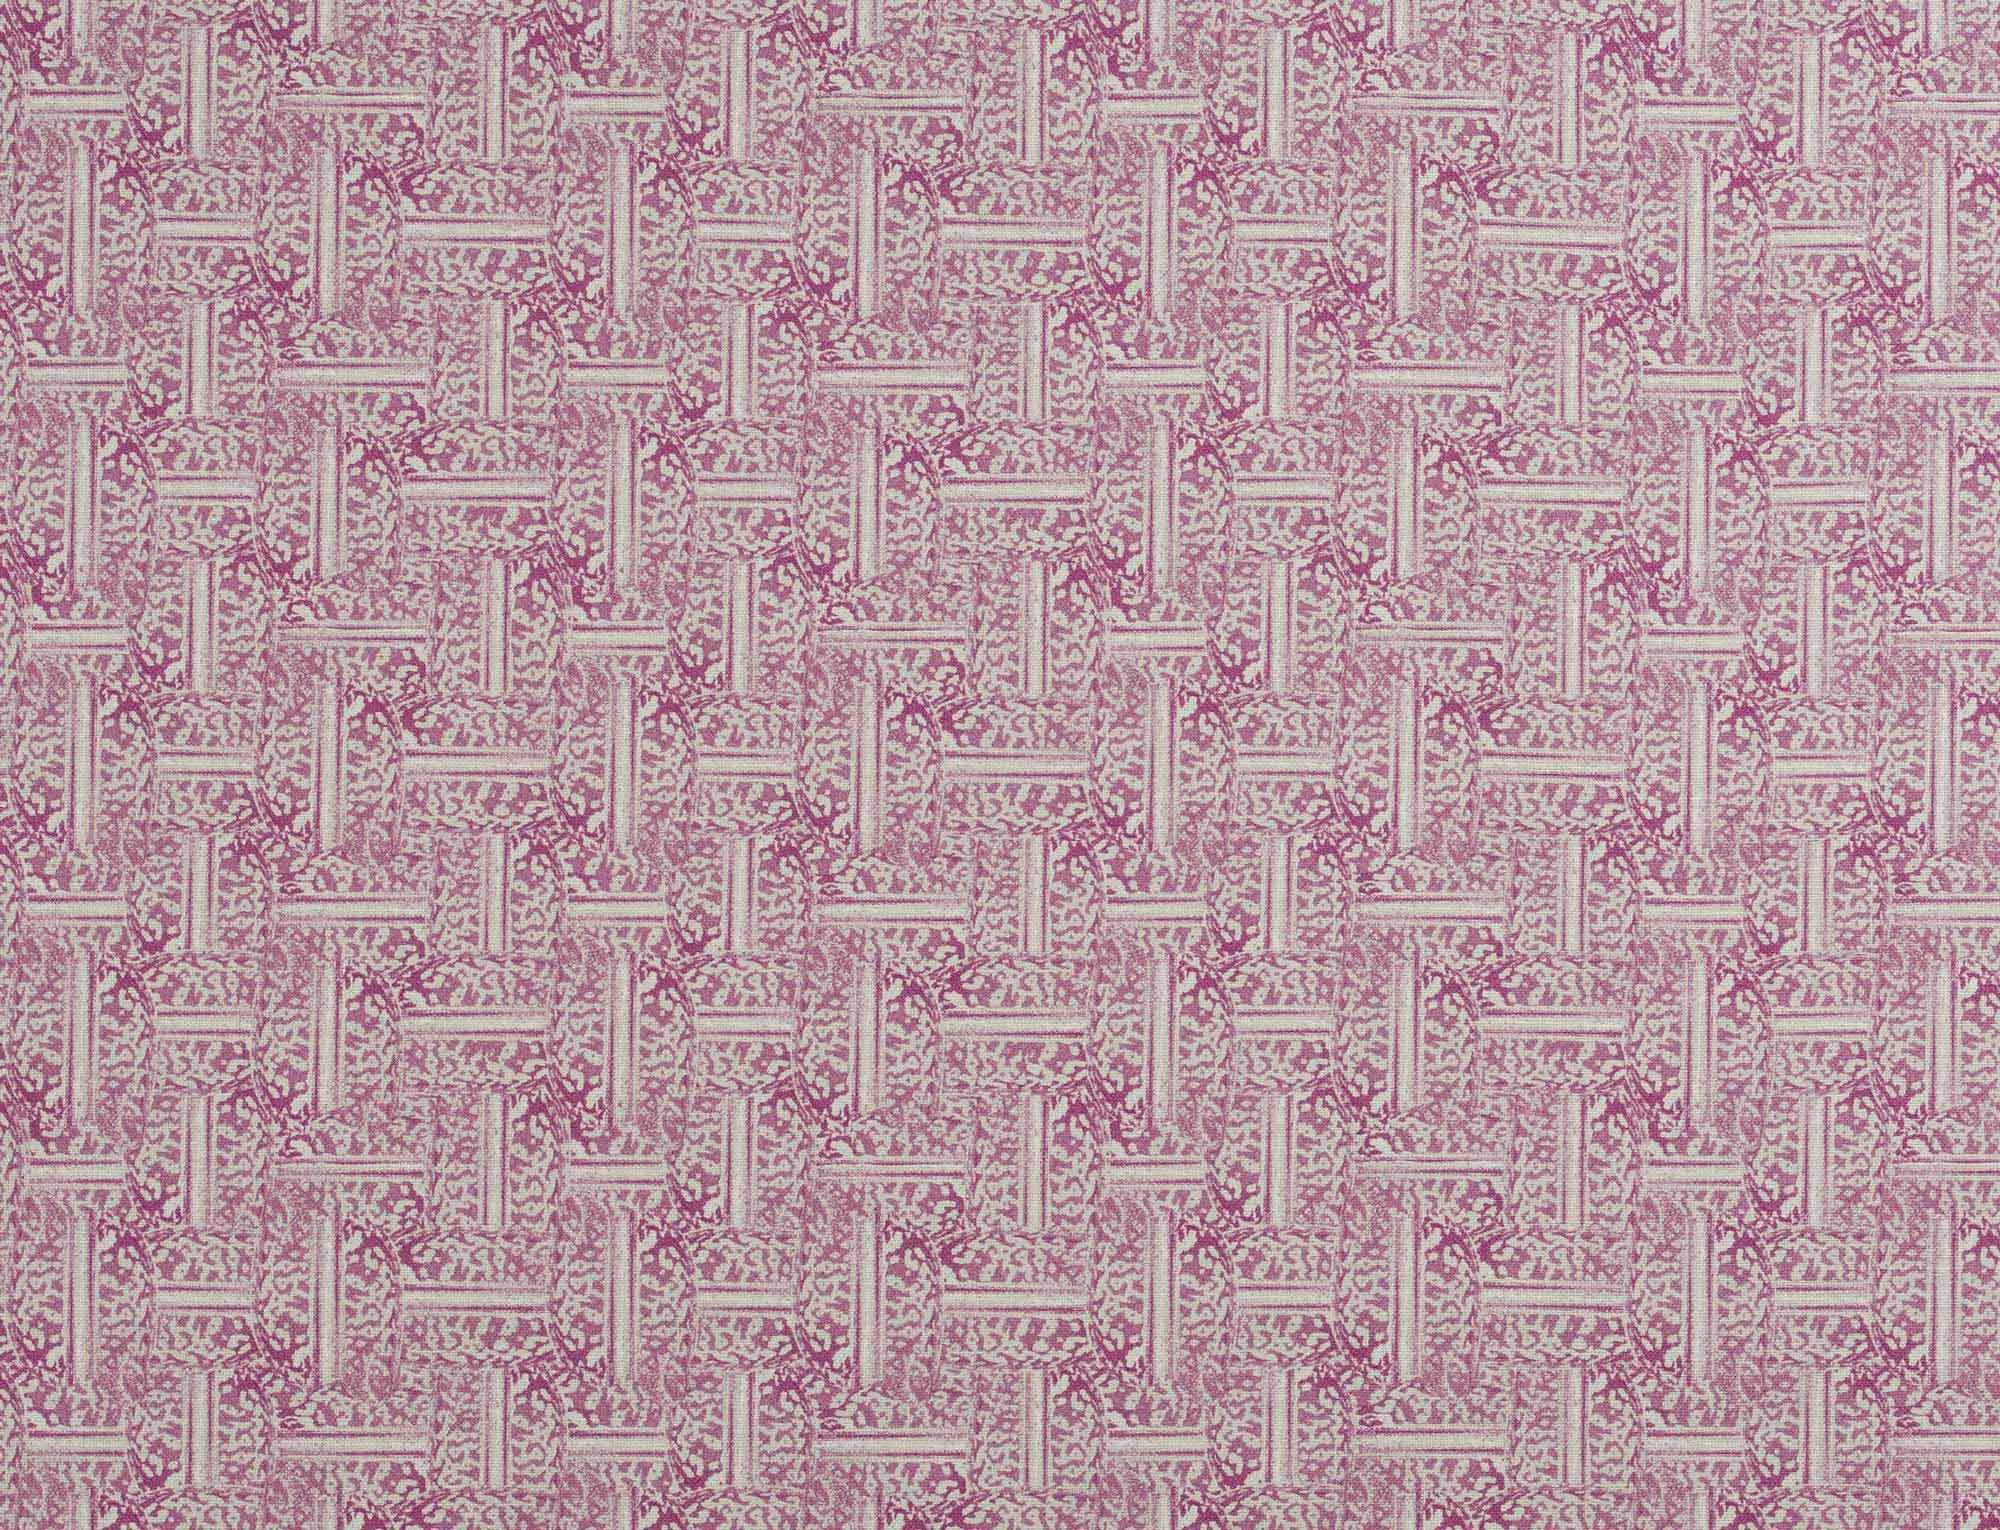 Detail of fabric in a geometric grid pattern in purple on a cream field.